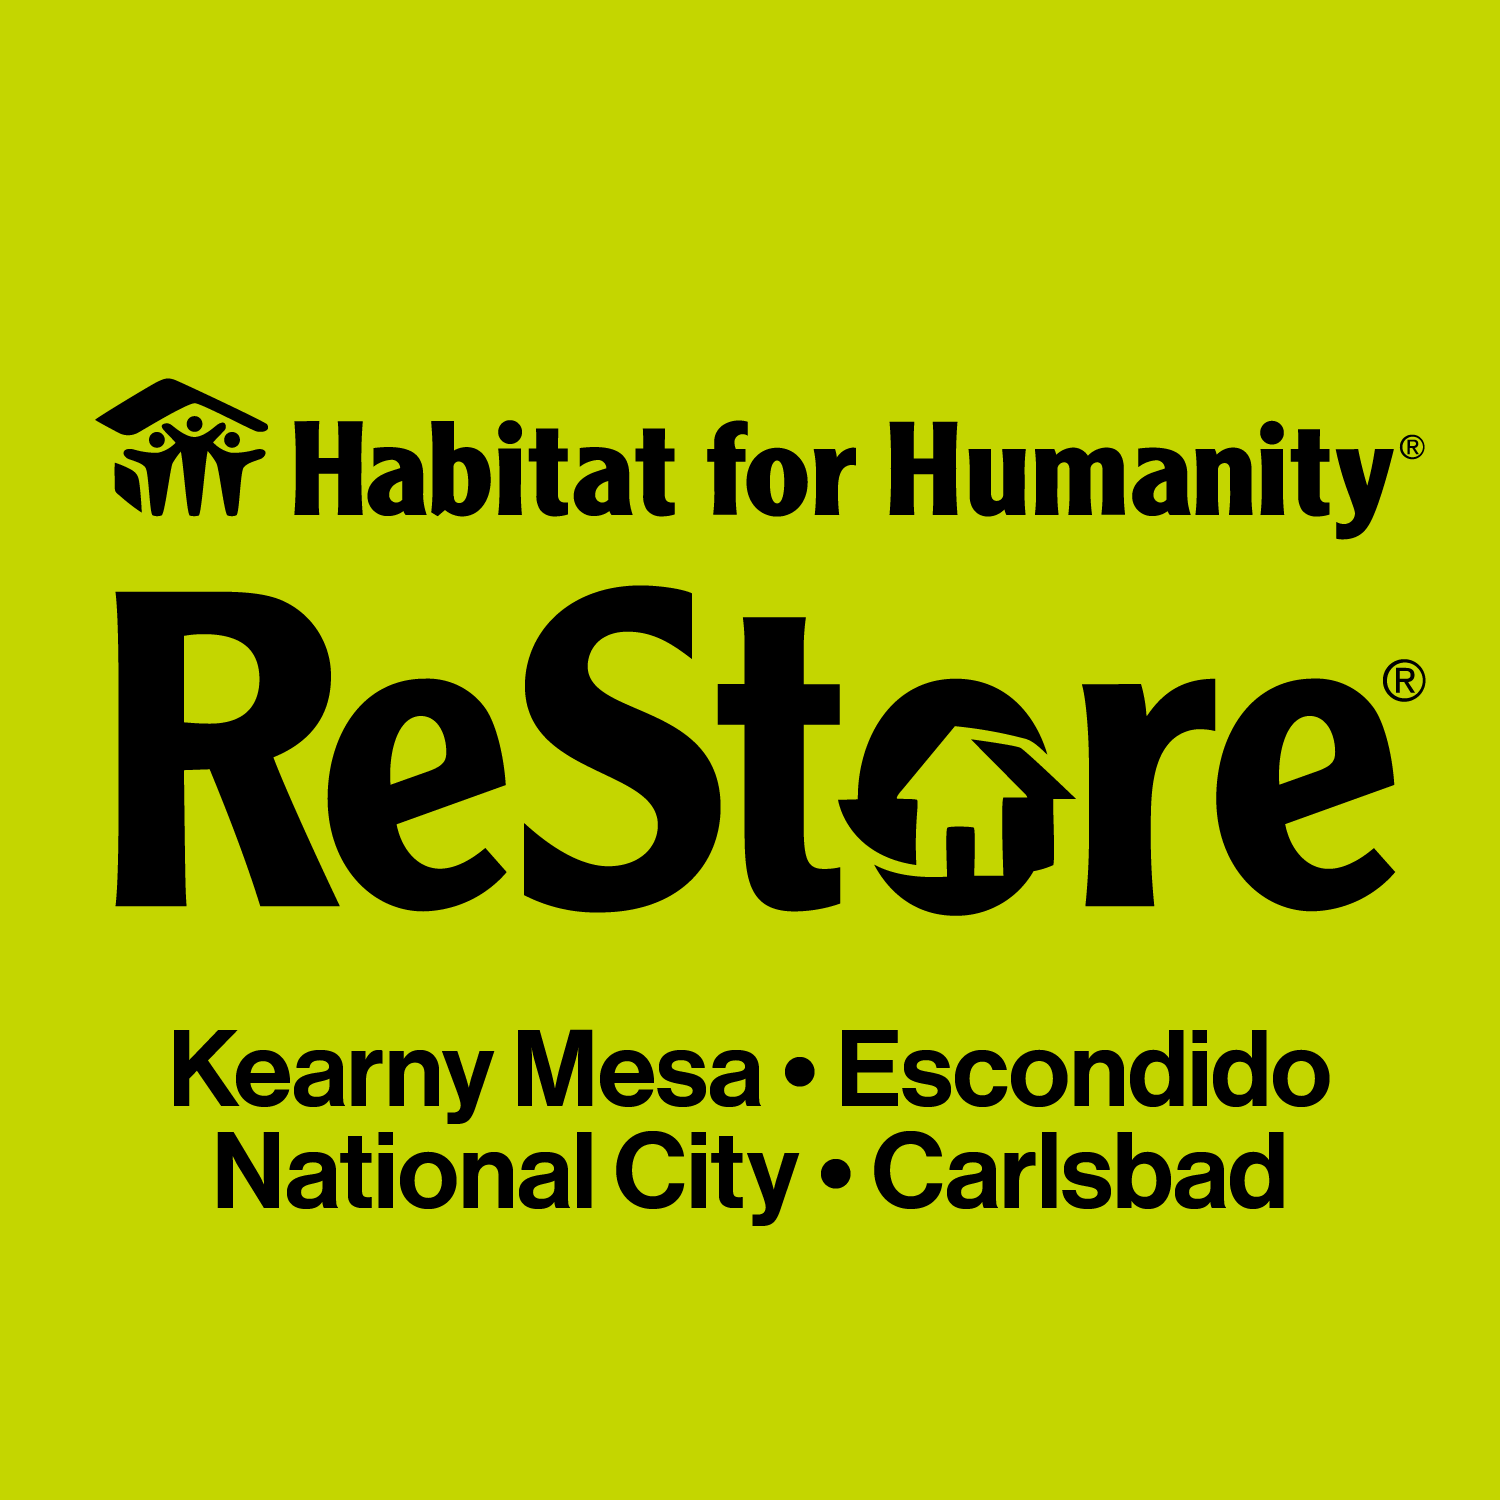 San Diego Habitat for Humanity ReStore Logo